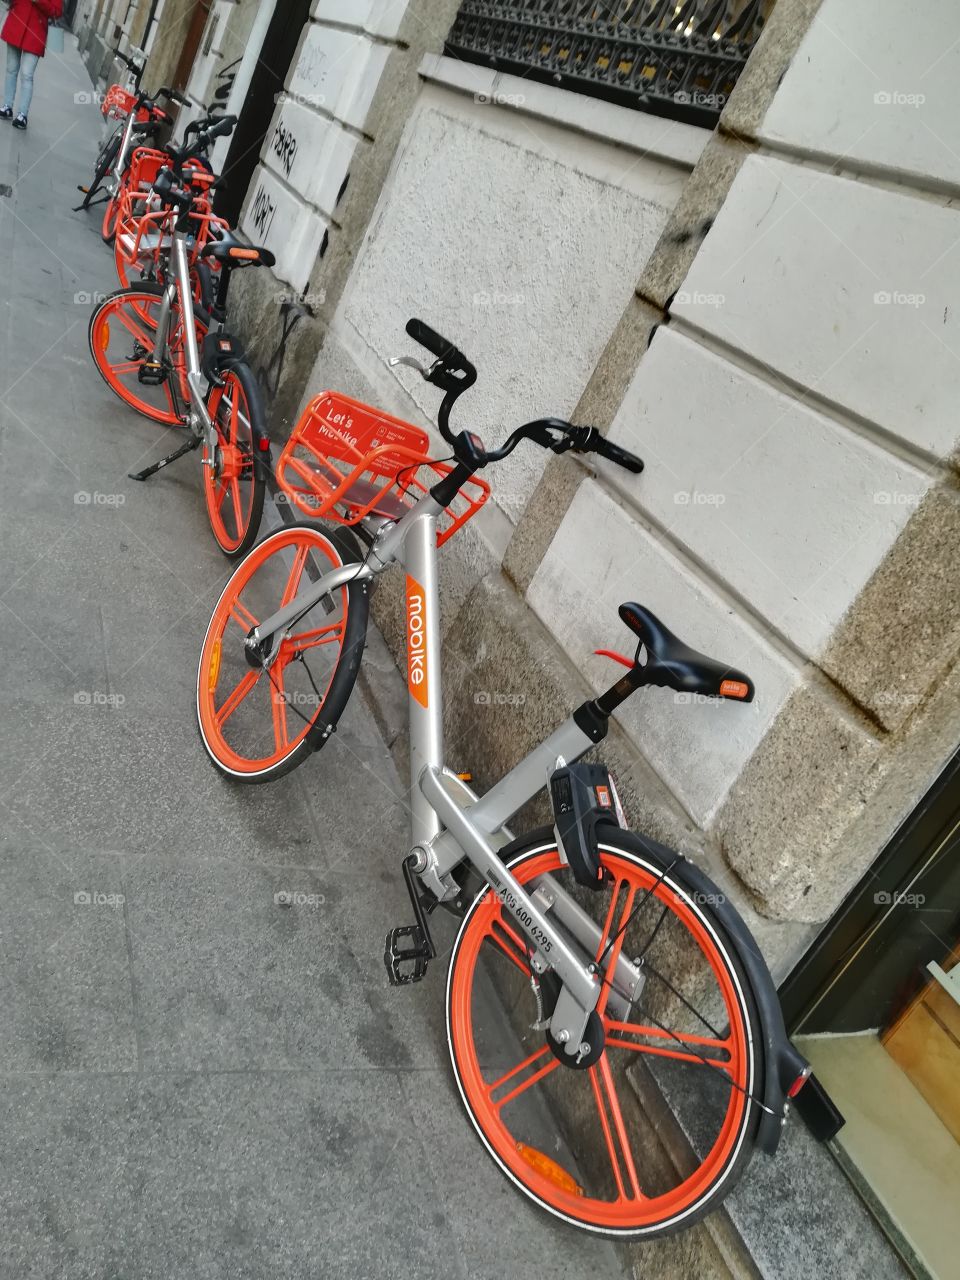 Mobike bike sharing in Milan